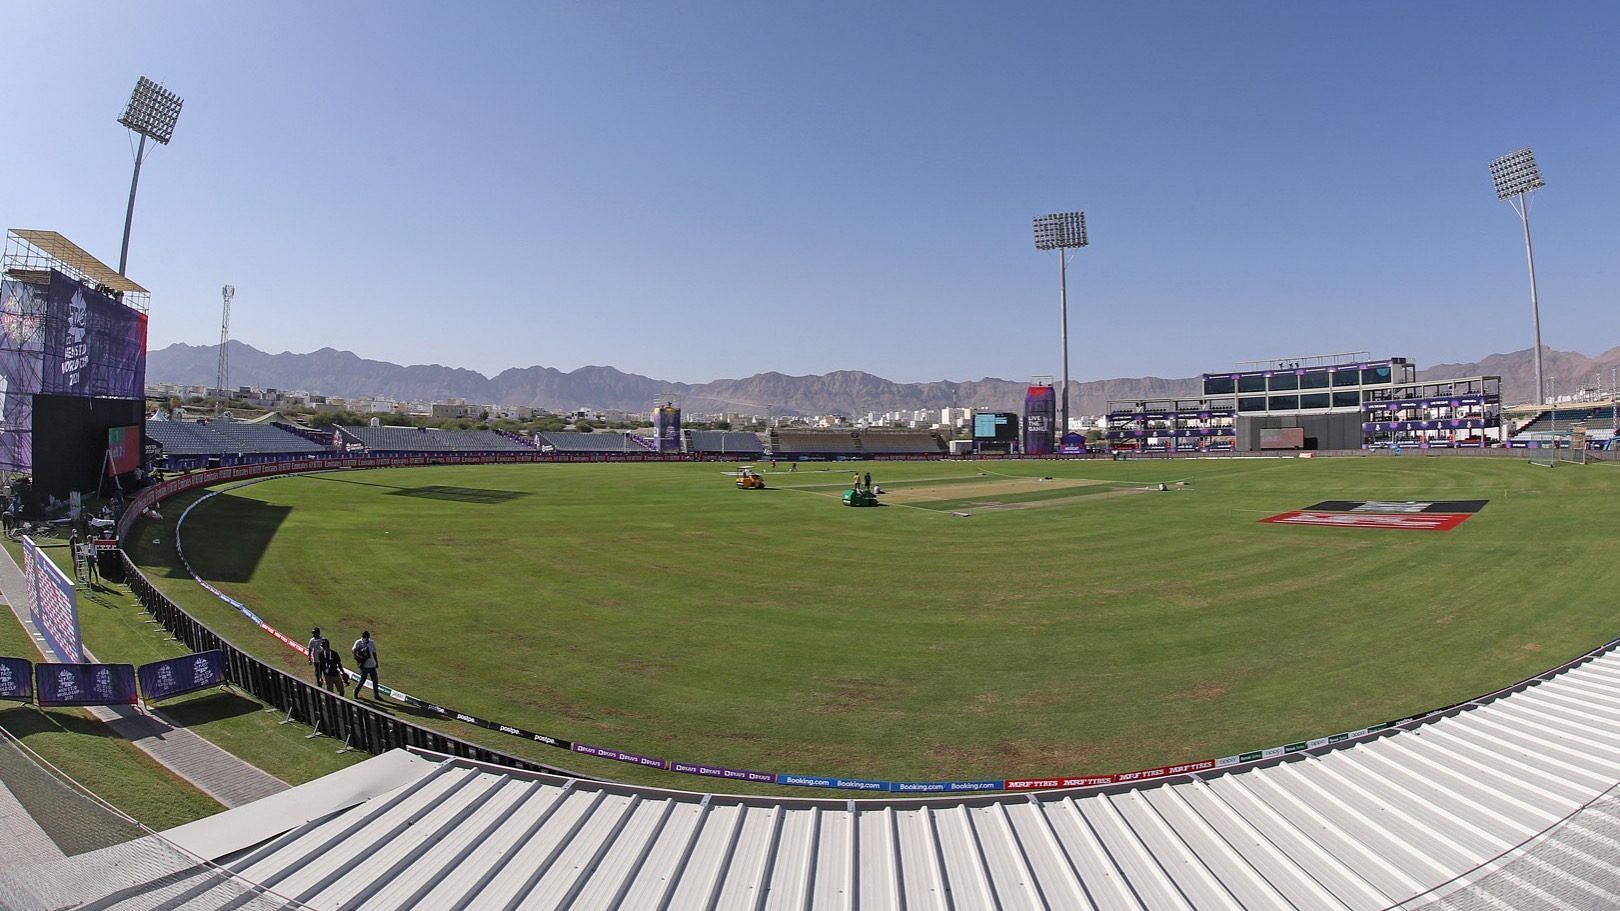 A view of the Al Amerat Cricket Ground, Oman, venue for the Oman D10 League